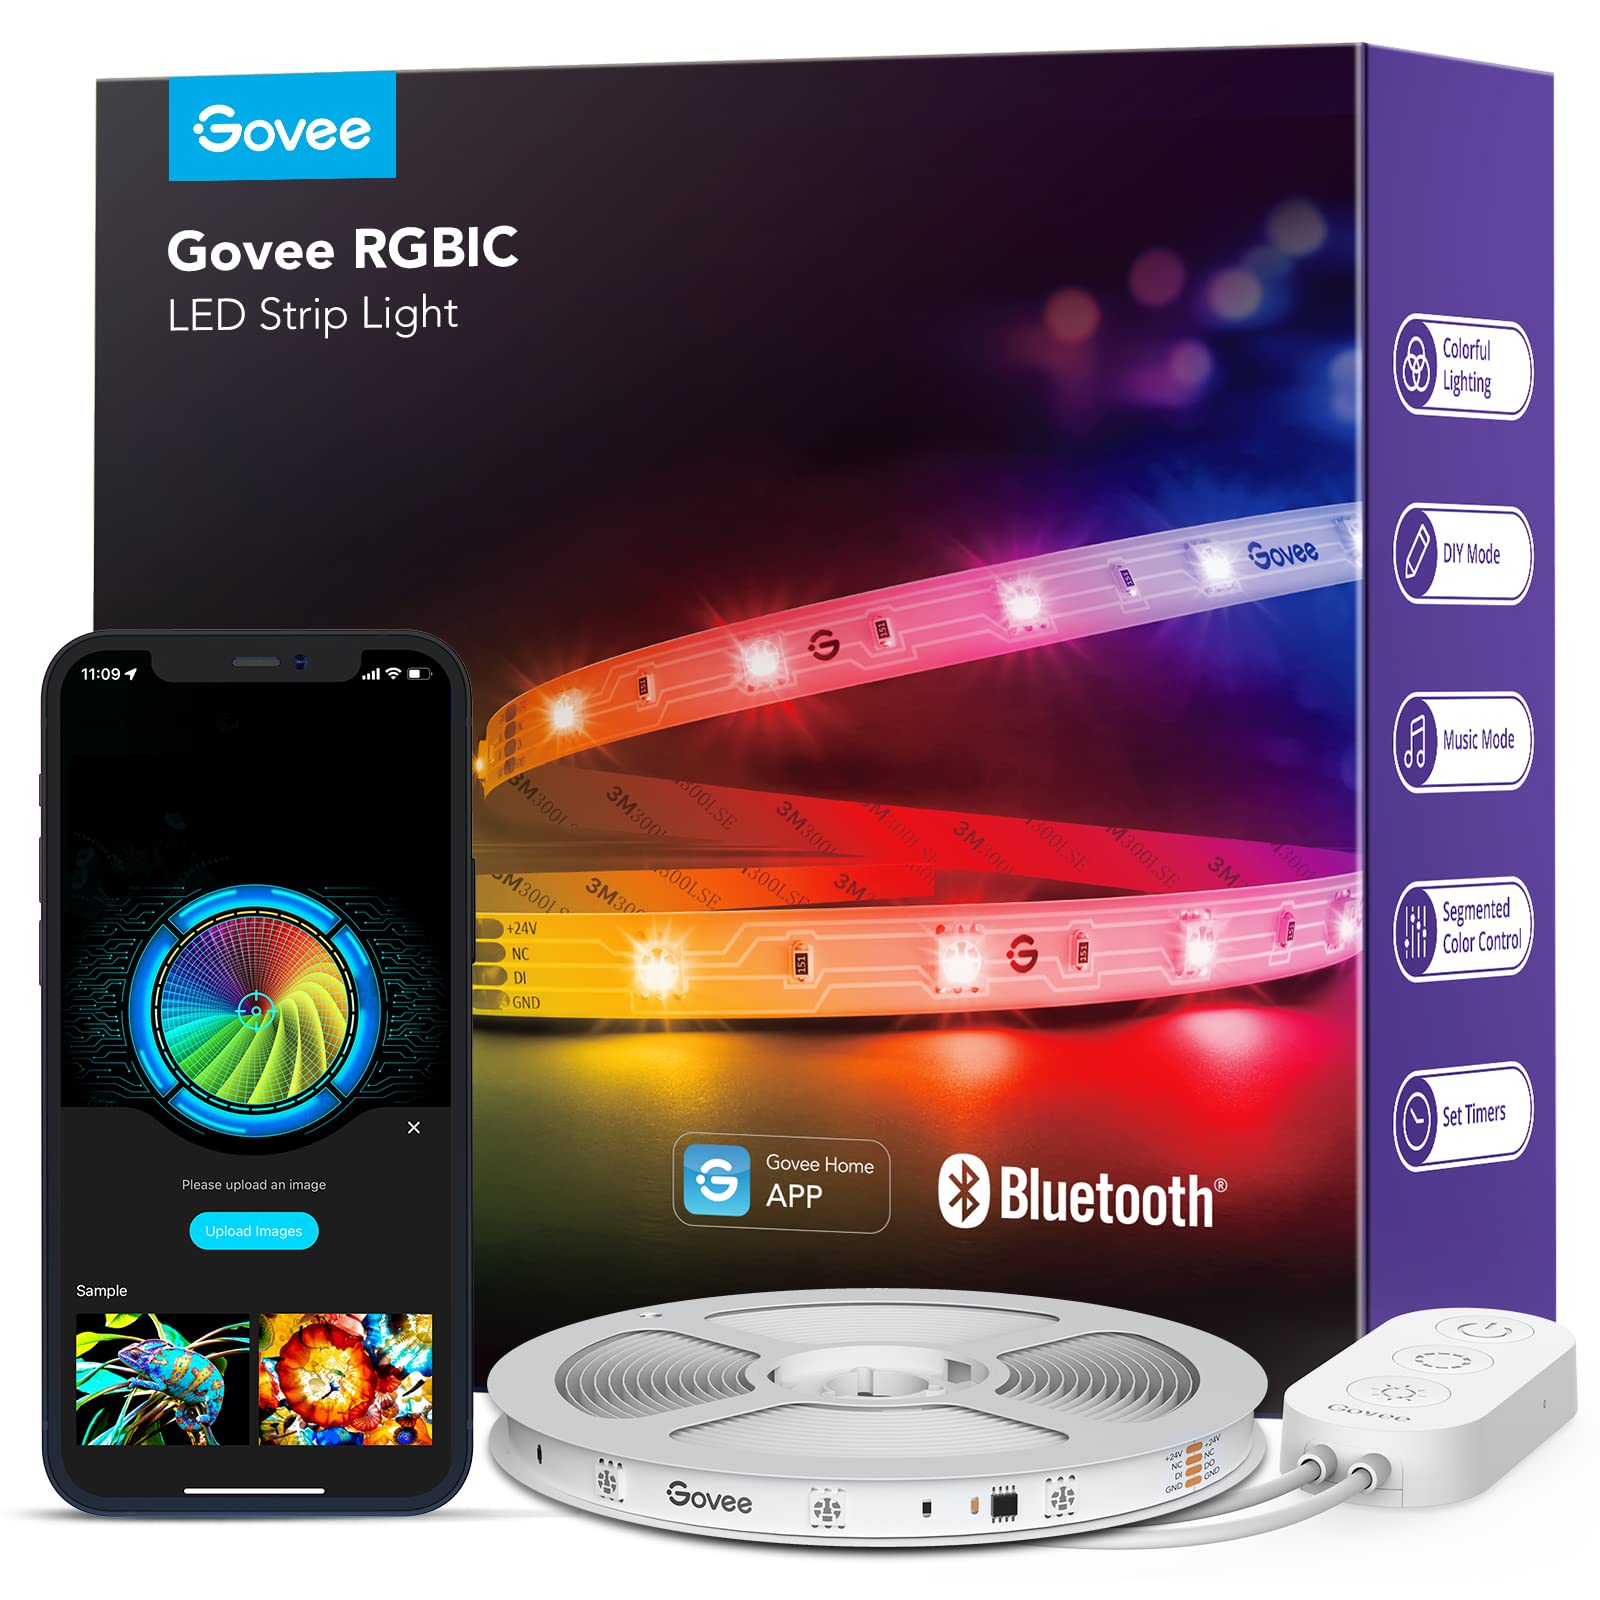 Govee RGBIC LED Strip Lights 16.4ft $9.99